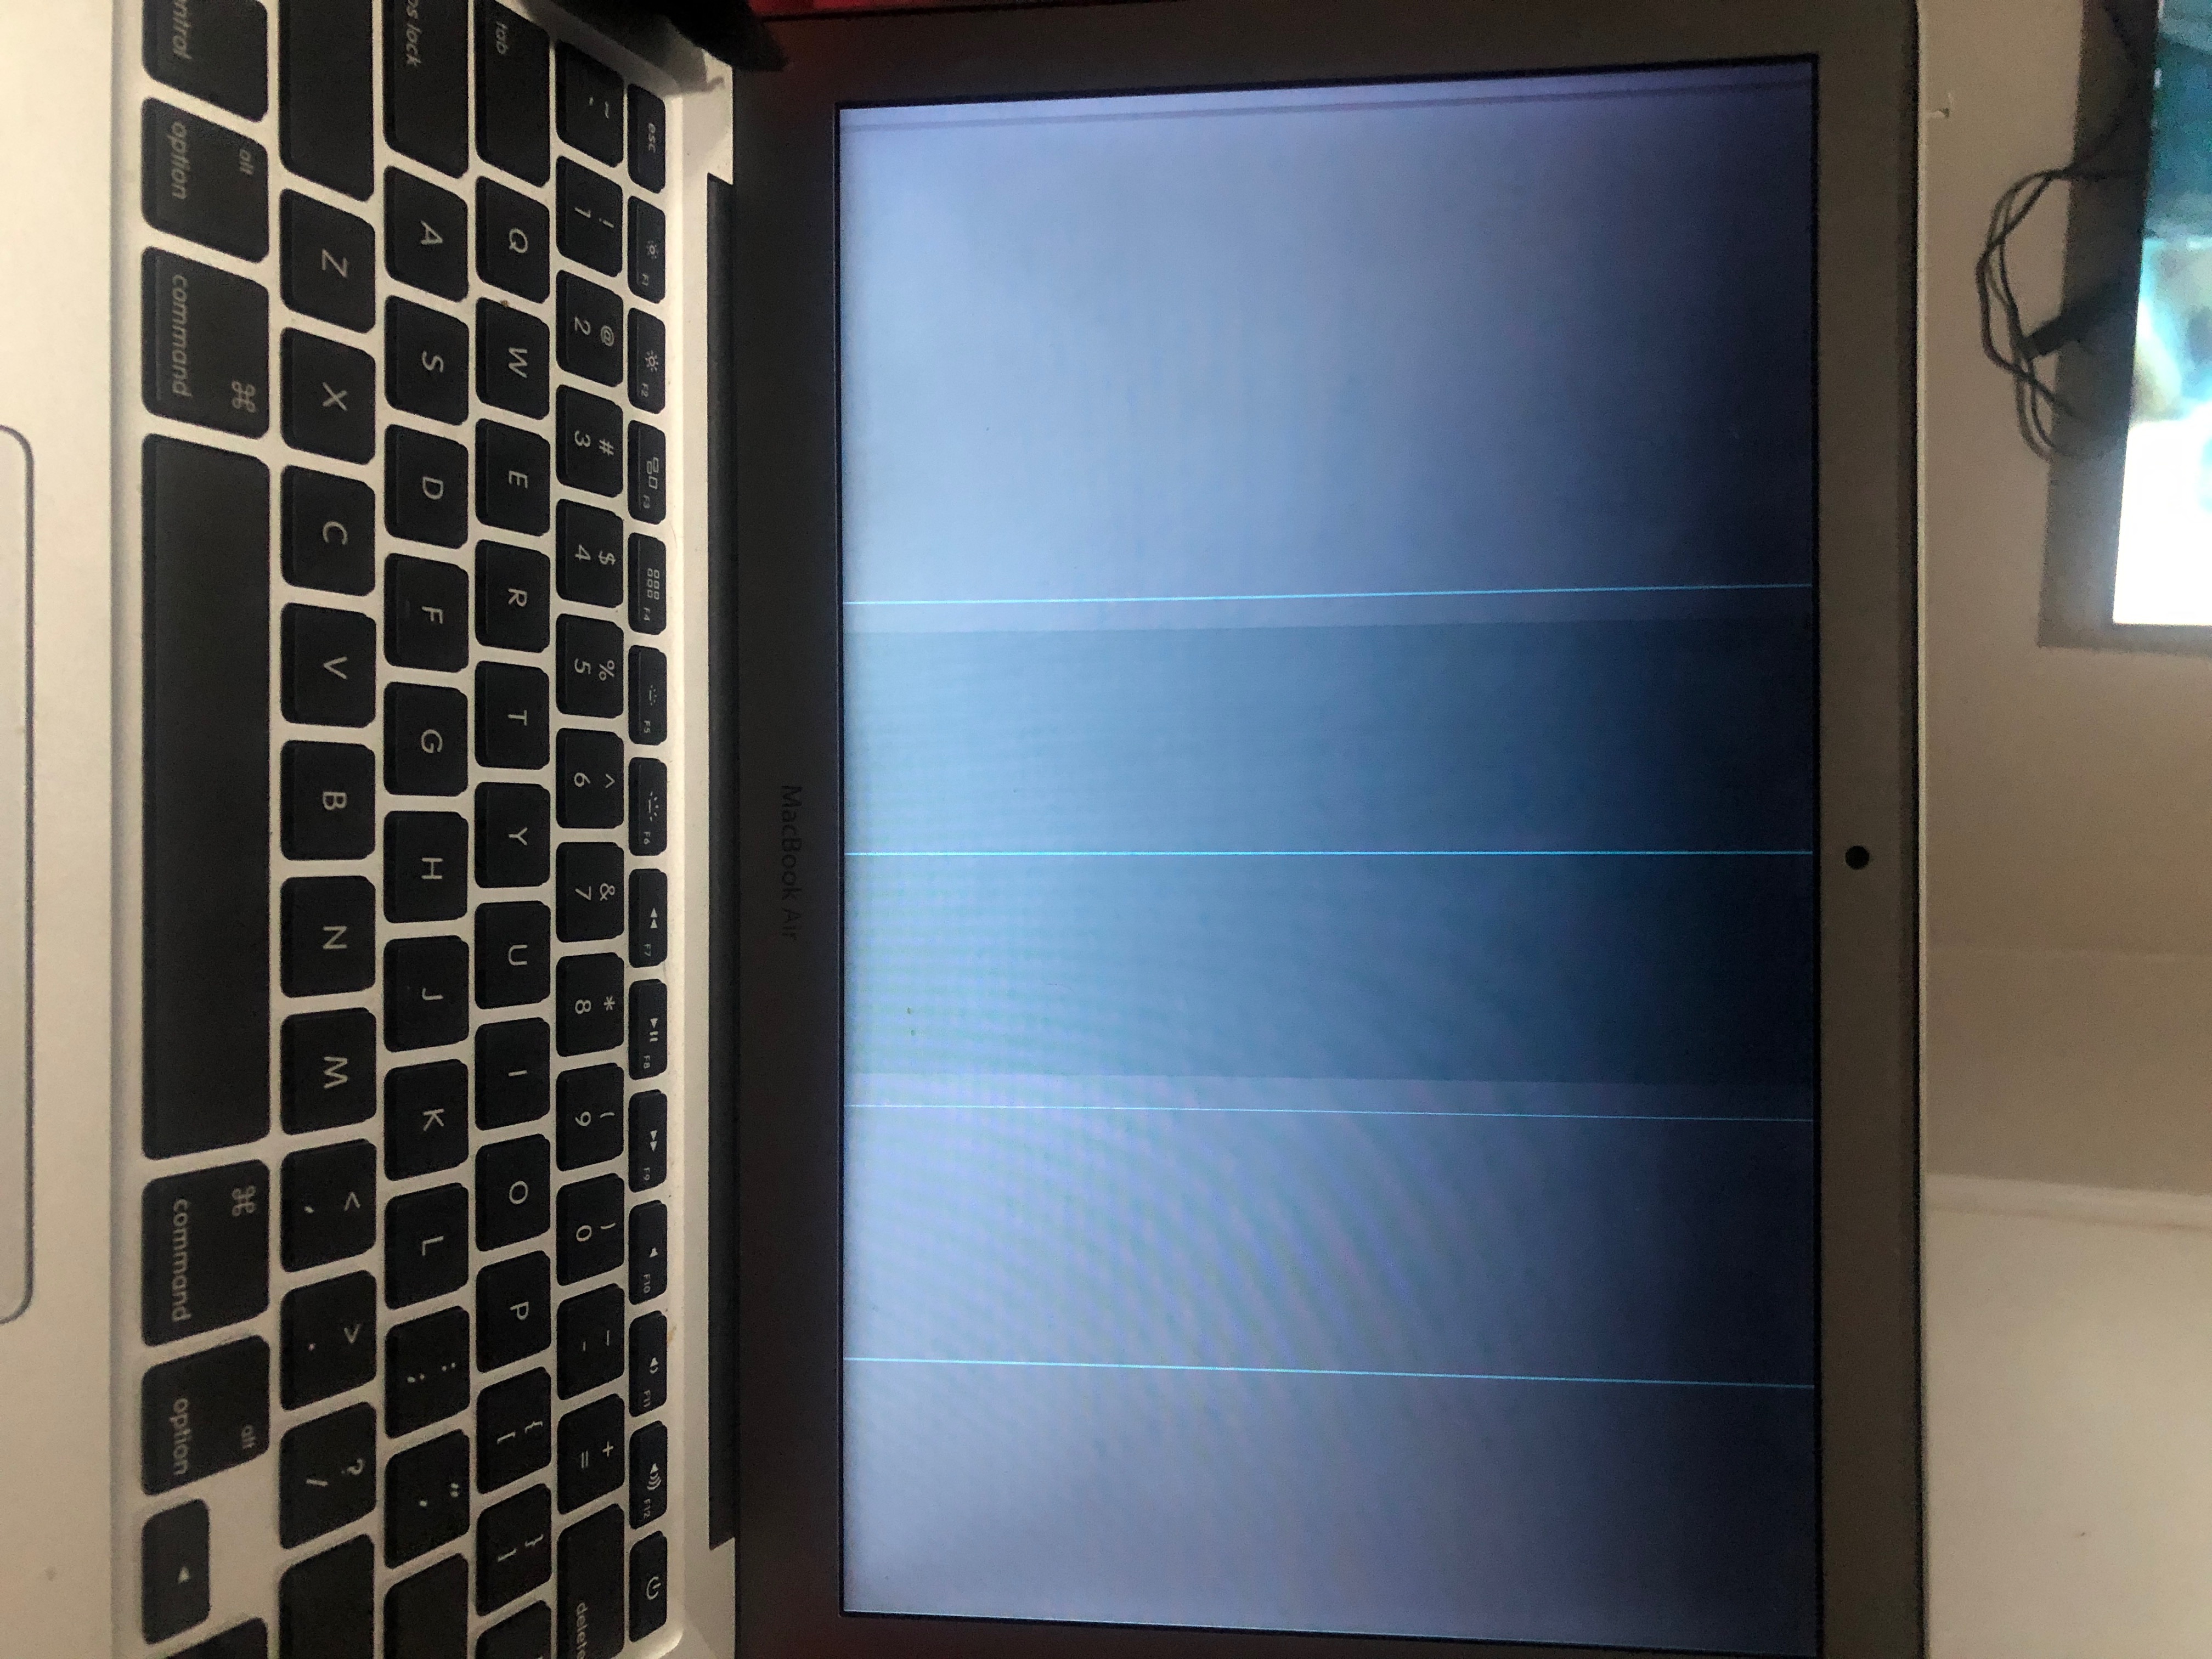 blank apple computer screen